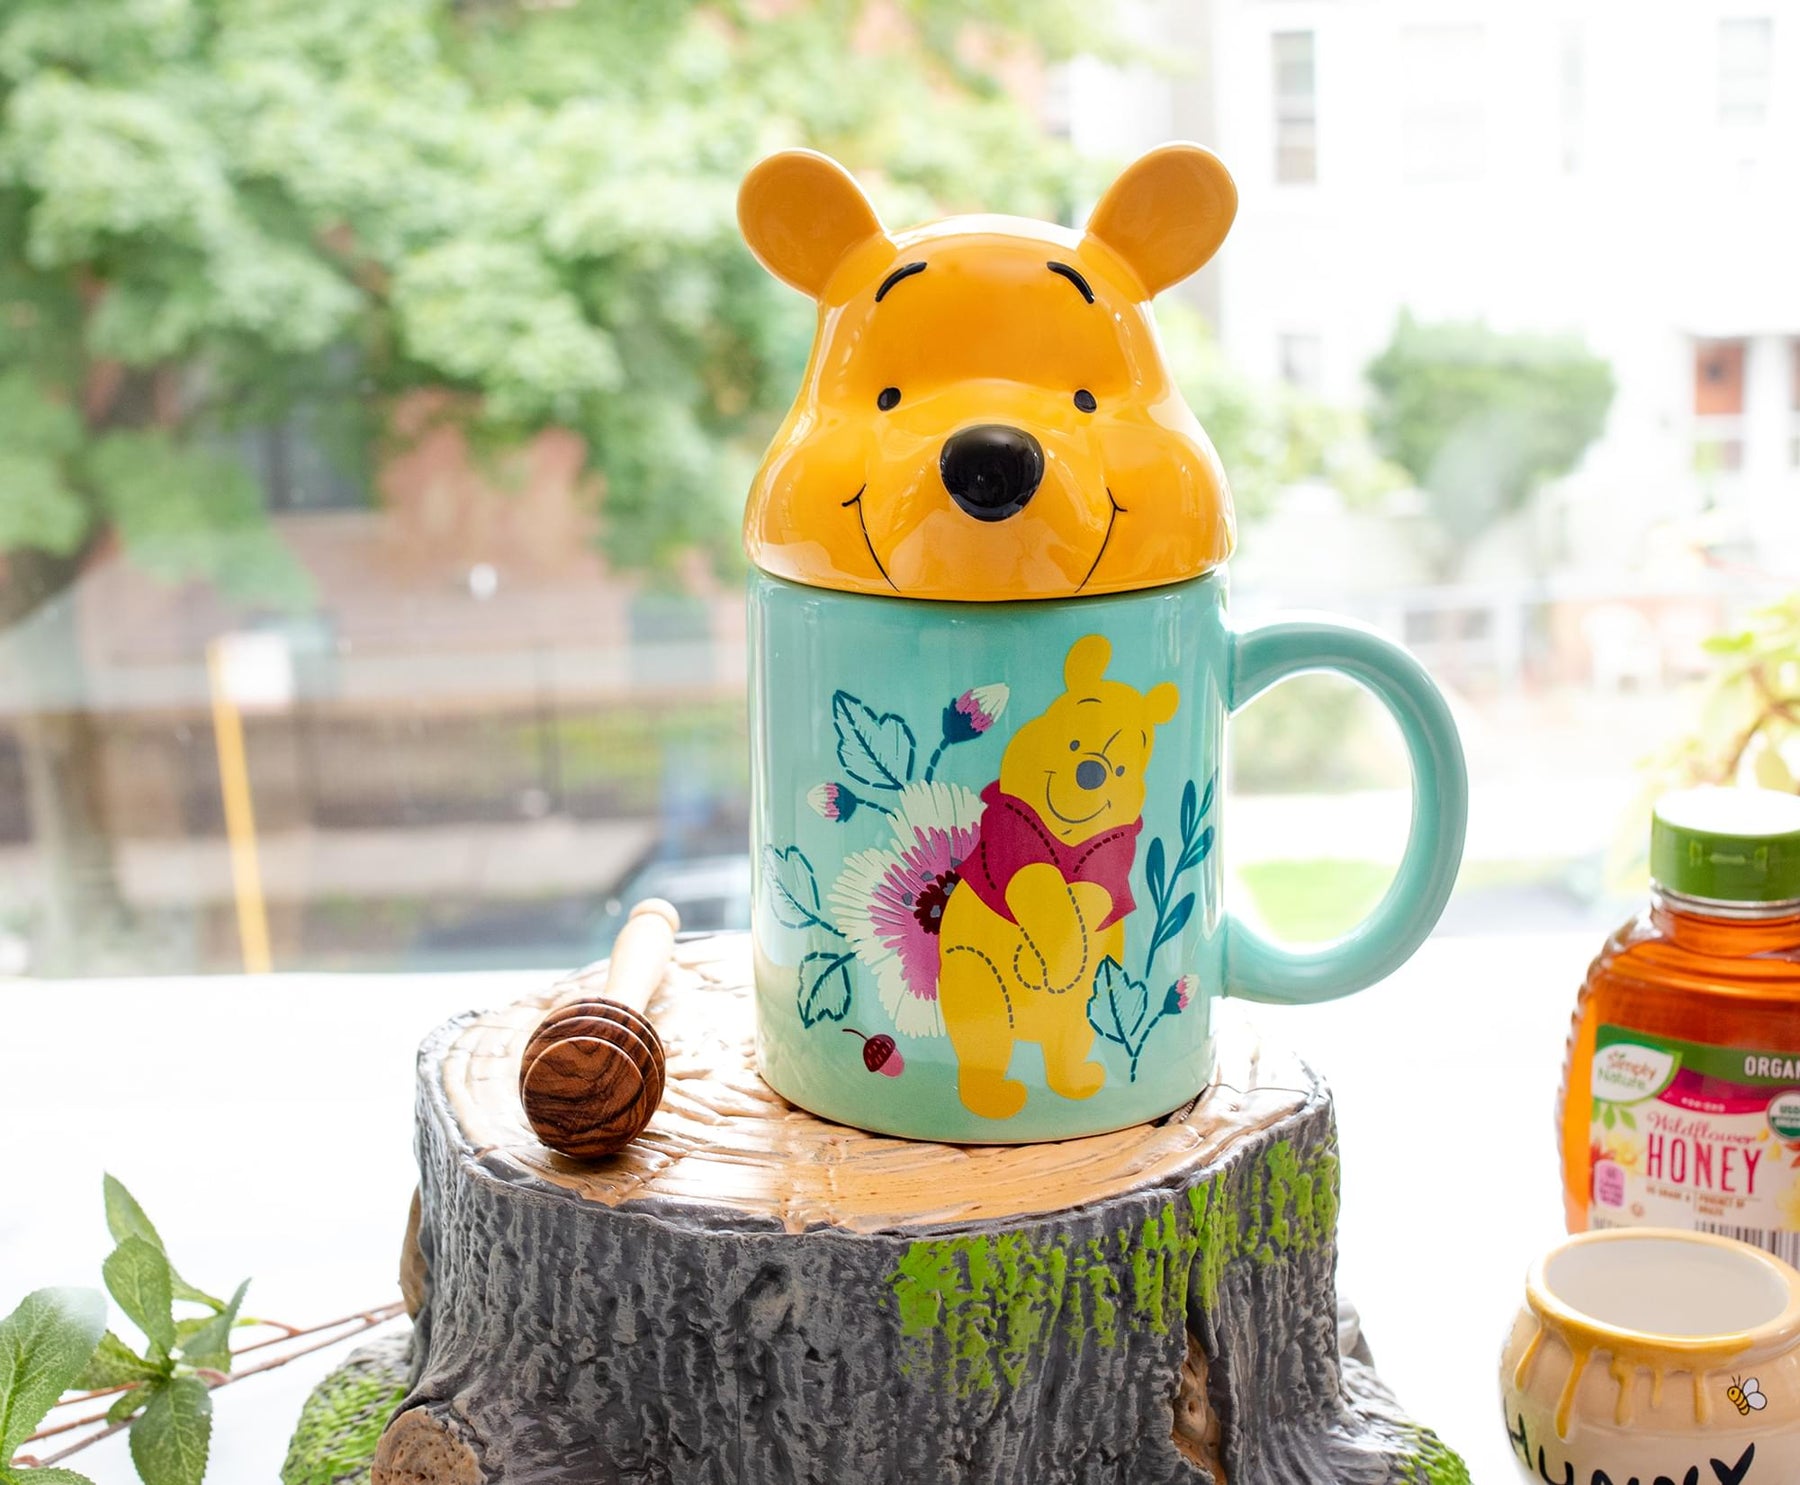 Winnie the Pooh Honey Pot Sculpted Snack Jar